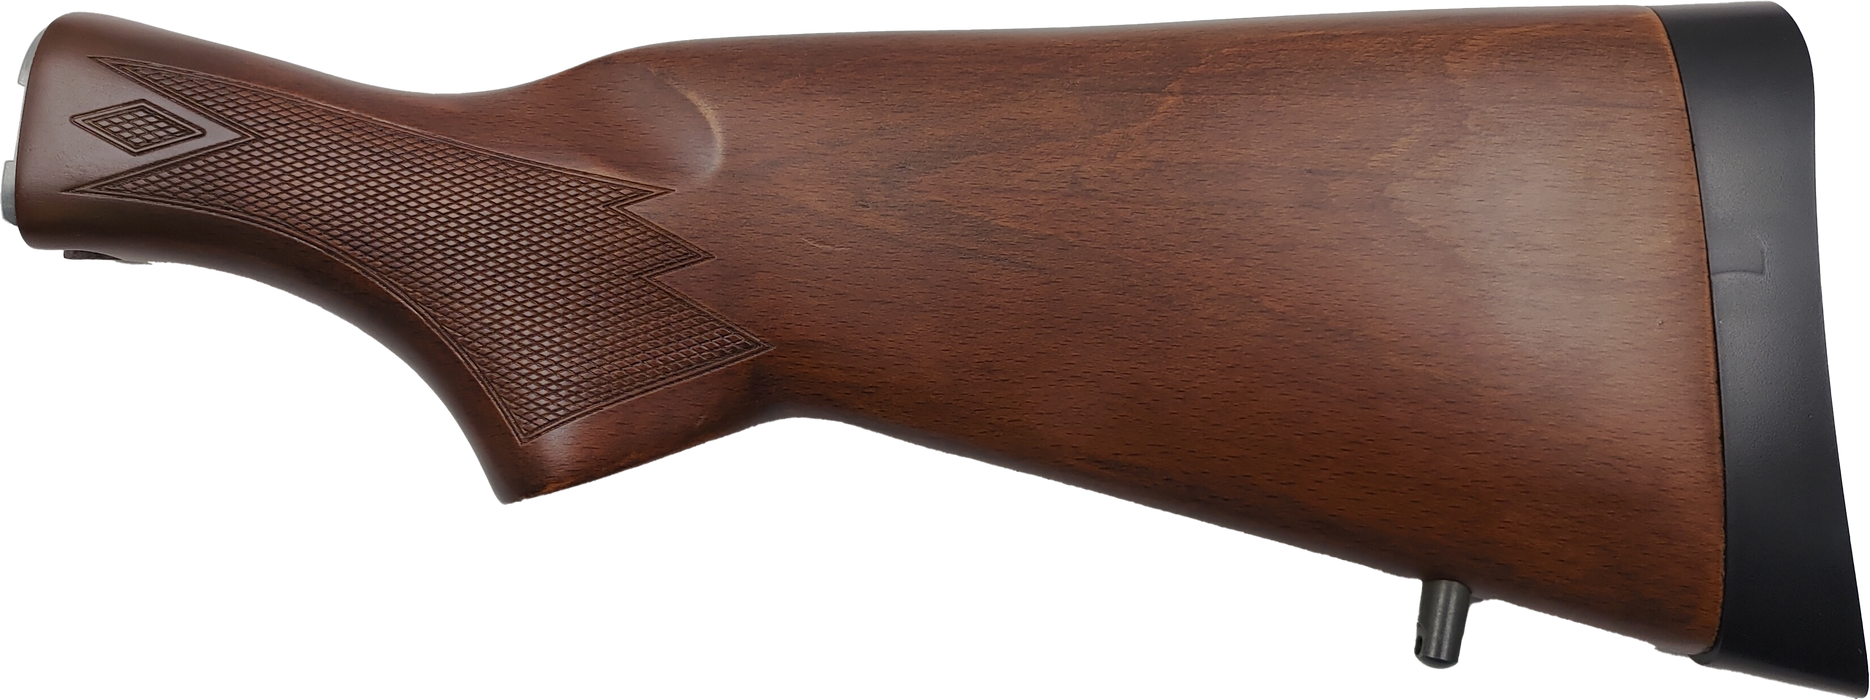 JAG Arms Modular Scattergun Real wood stock